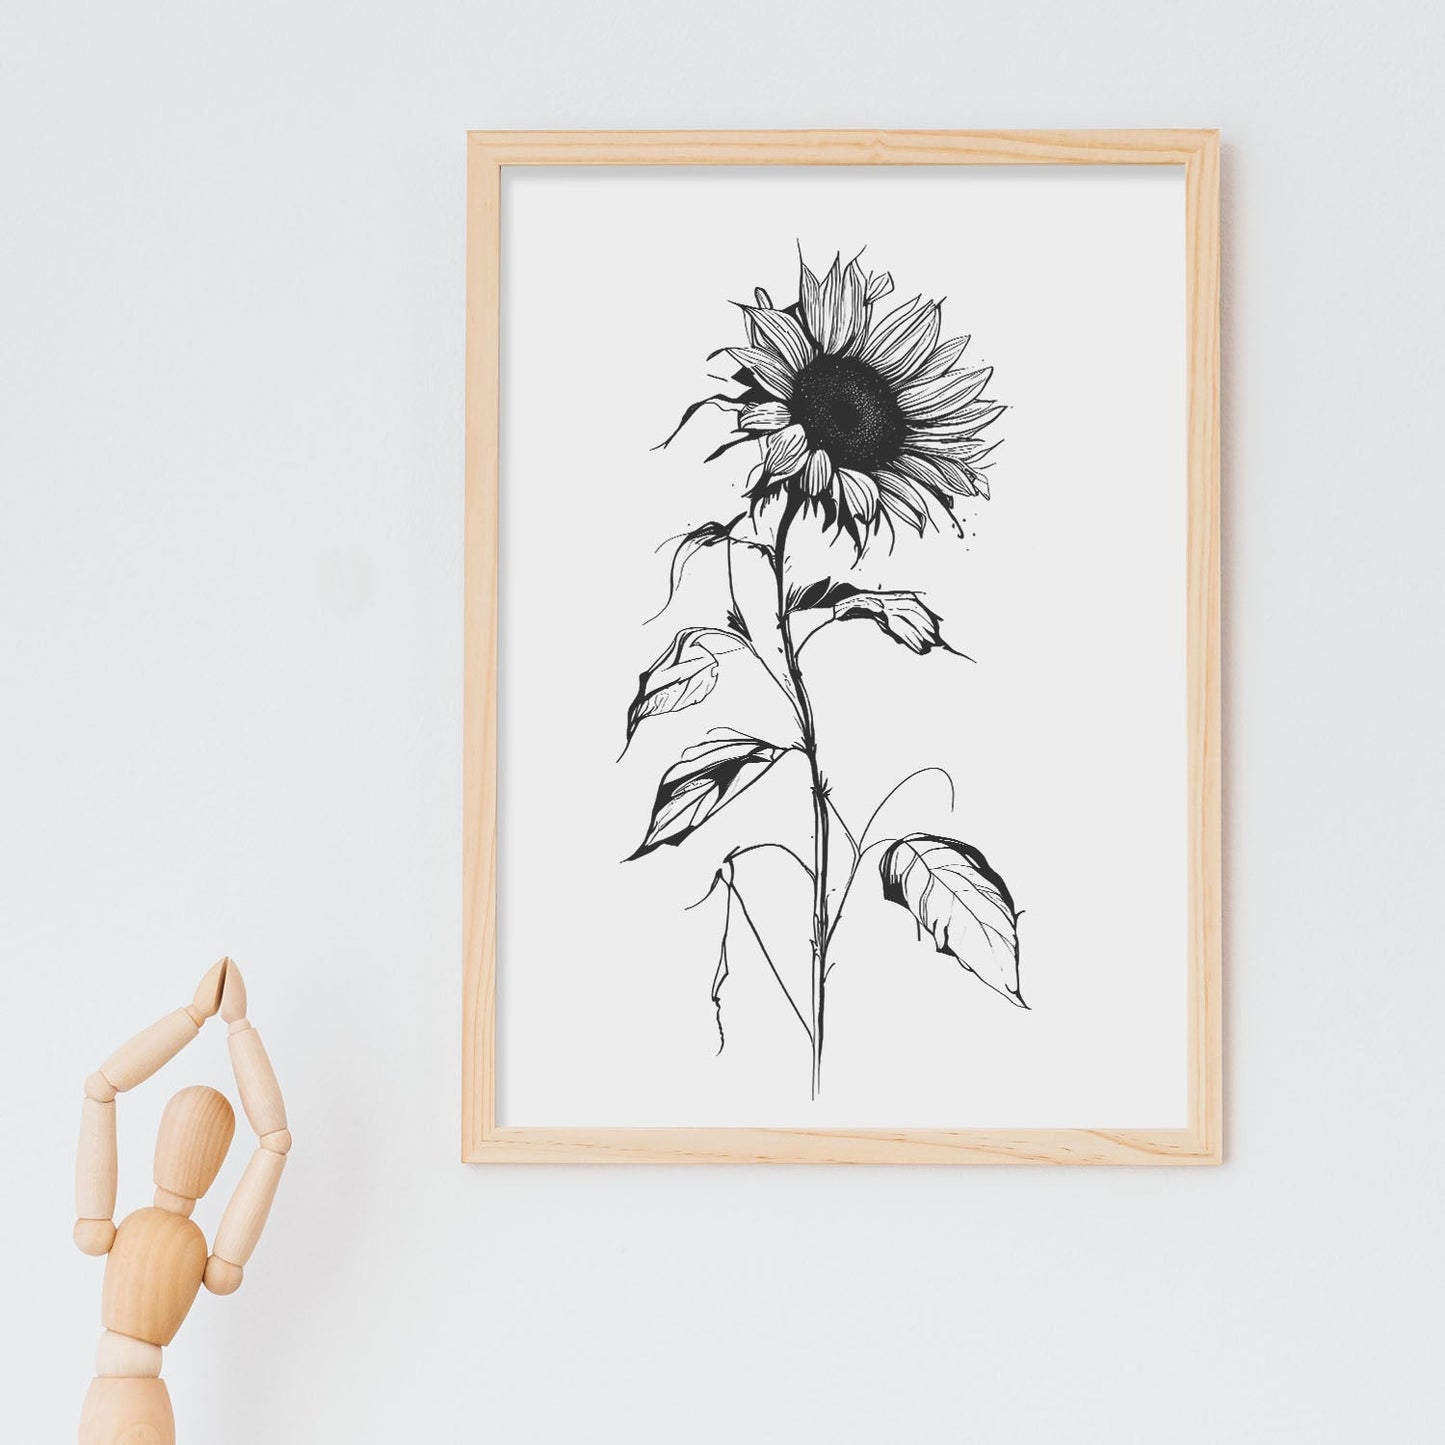 Nacnic Sunflower Minimalist Line Art_2. Aesthetic Wall Art Prints for Bedroom or Living Room Design.